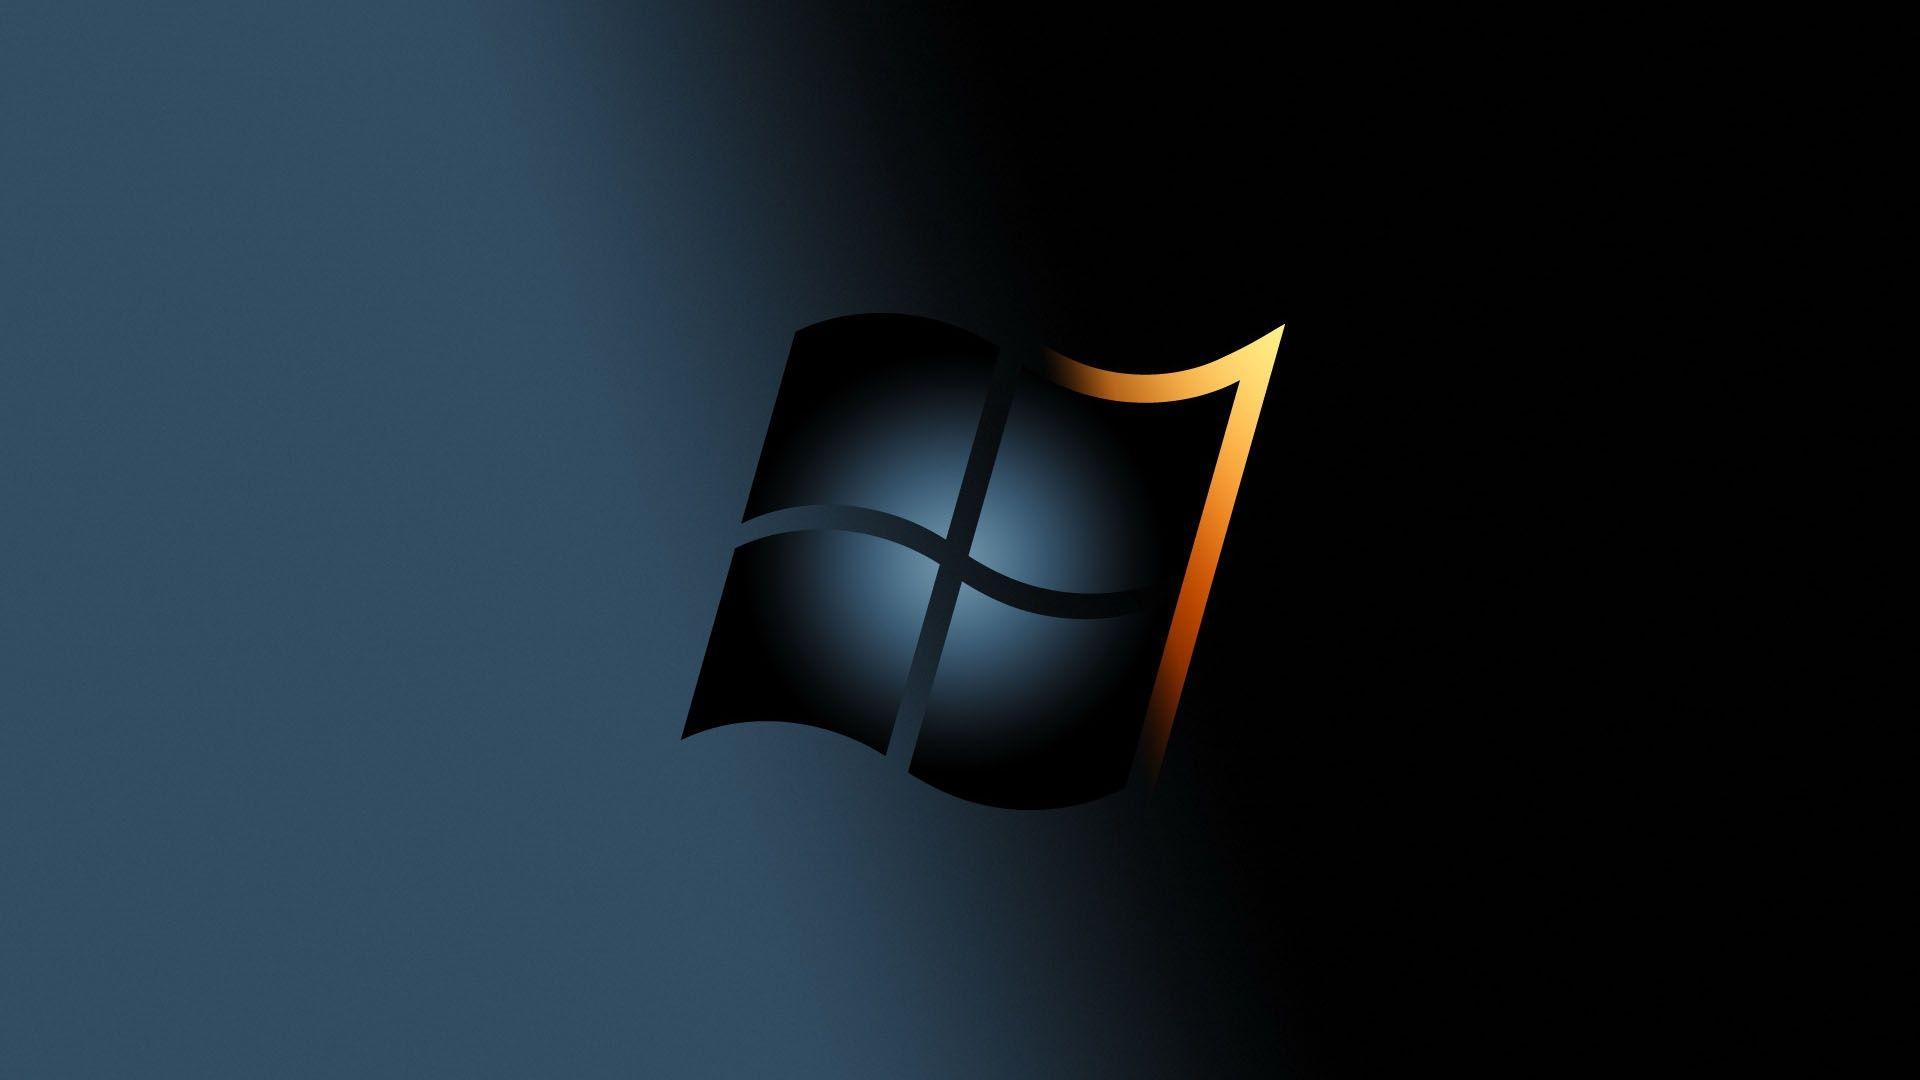 Wallpaper For > Animated Desktop Background Windows 7